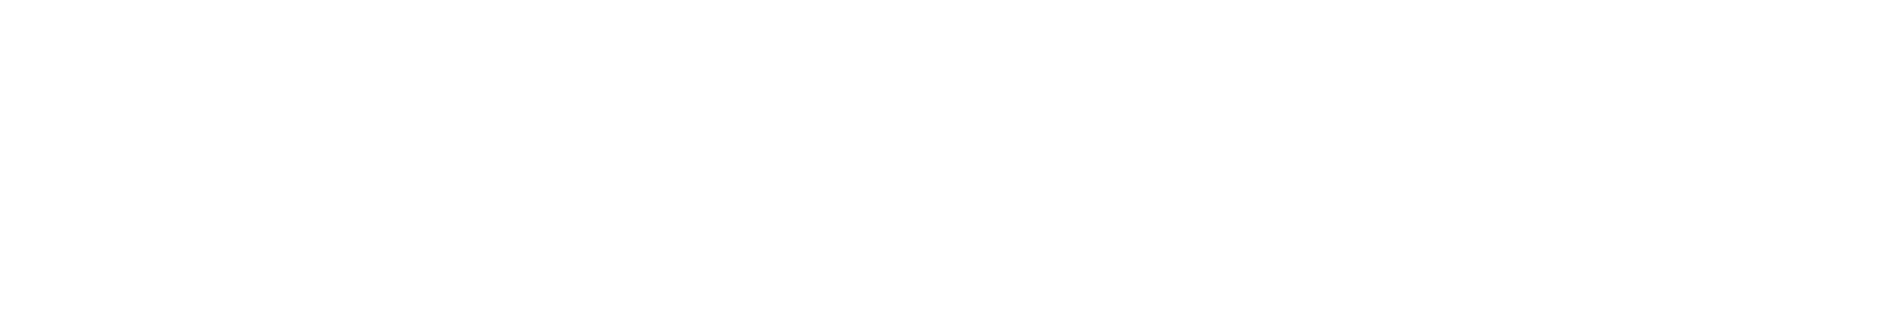 sailorrose logo design